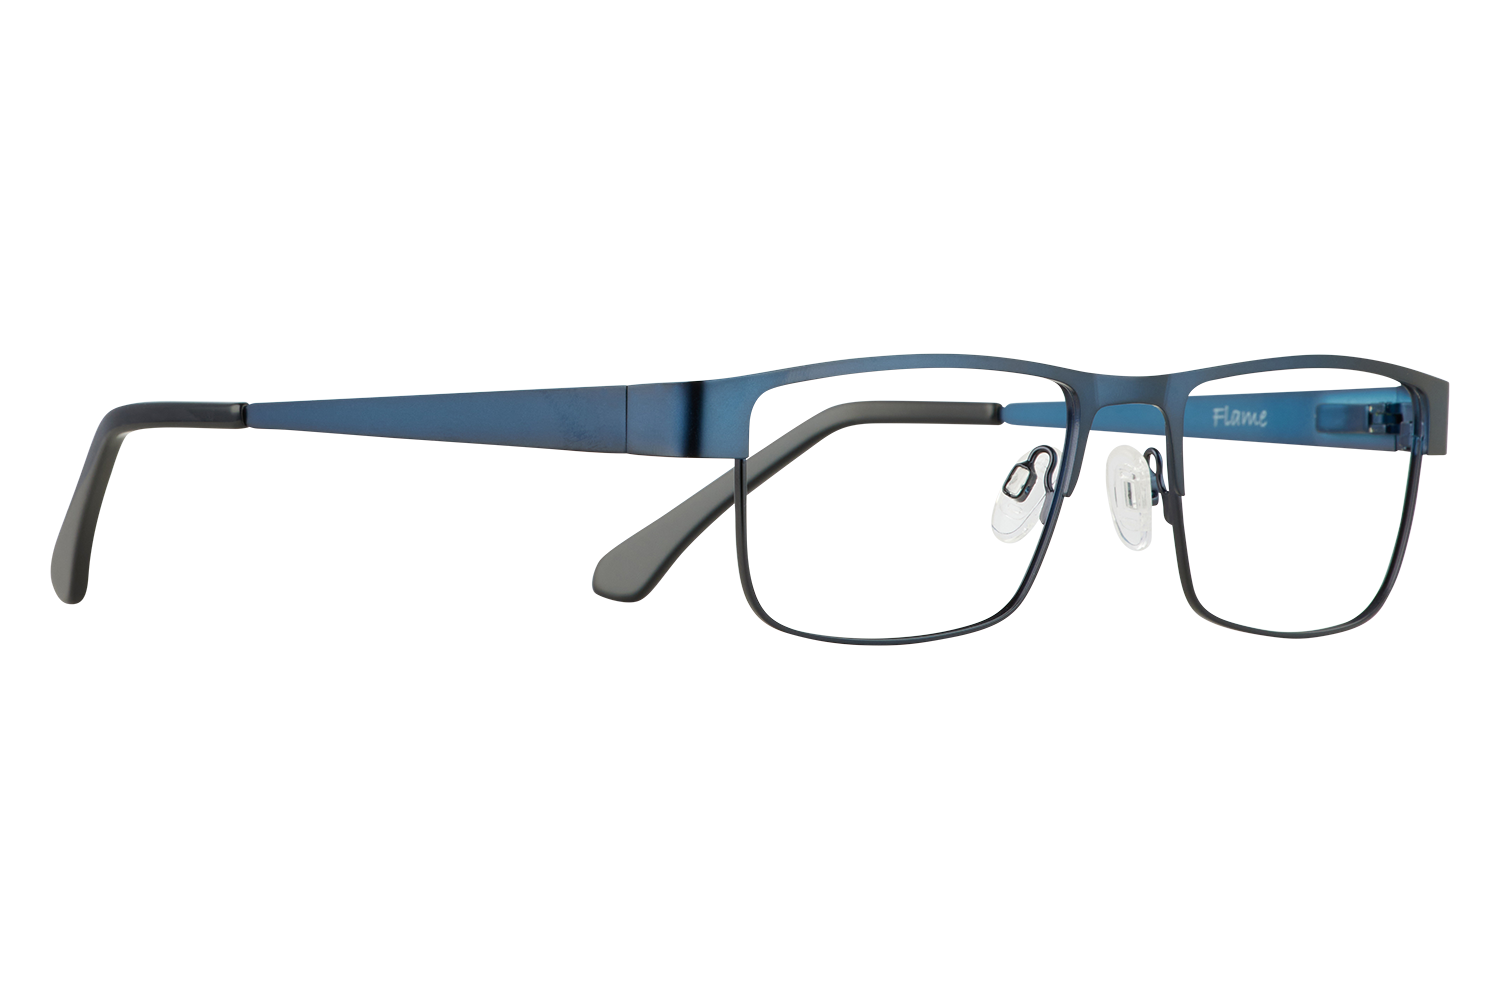 Unisex Spectacle Glasses Frames | SUPER Deals!